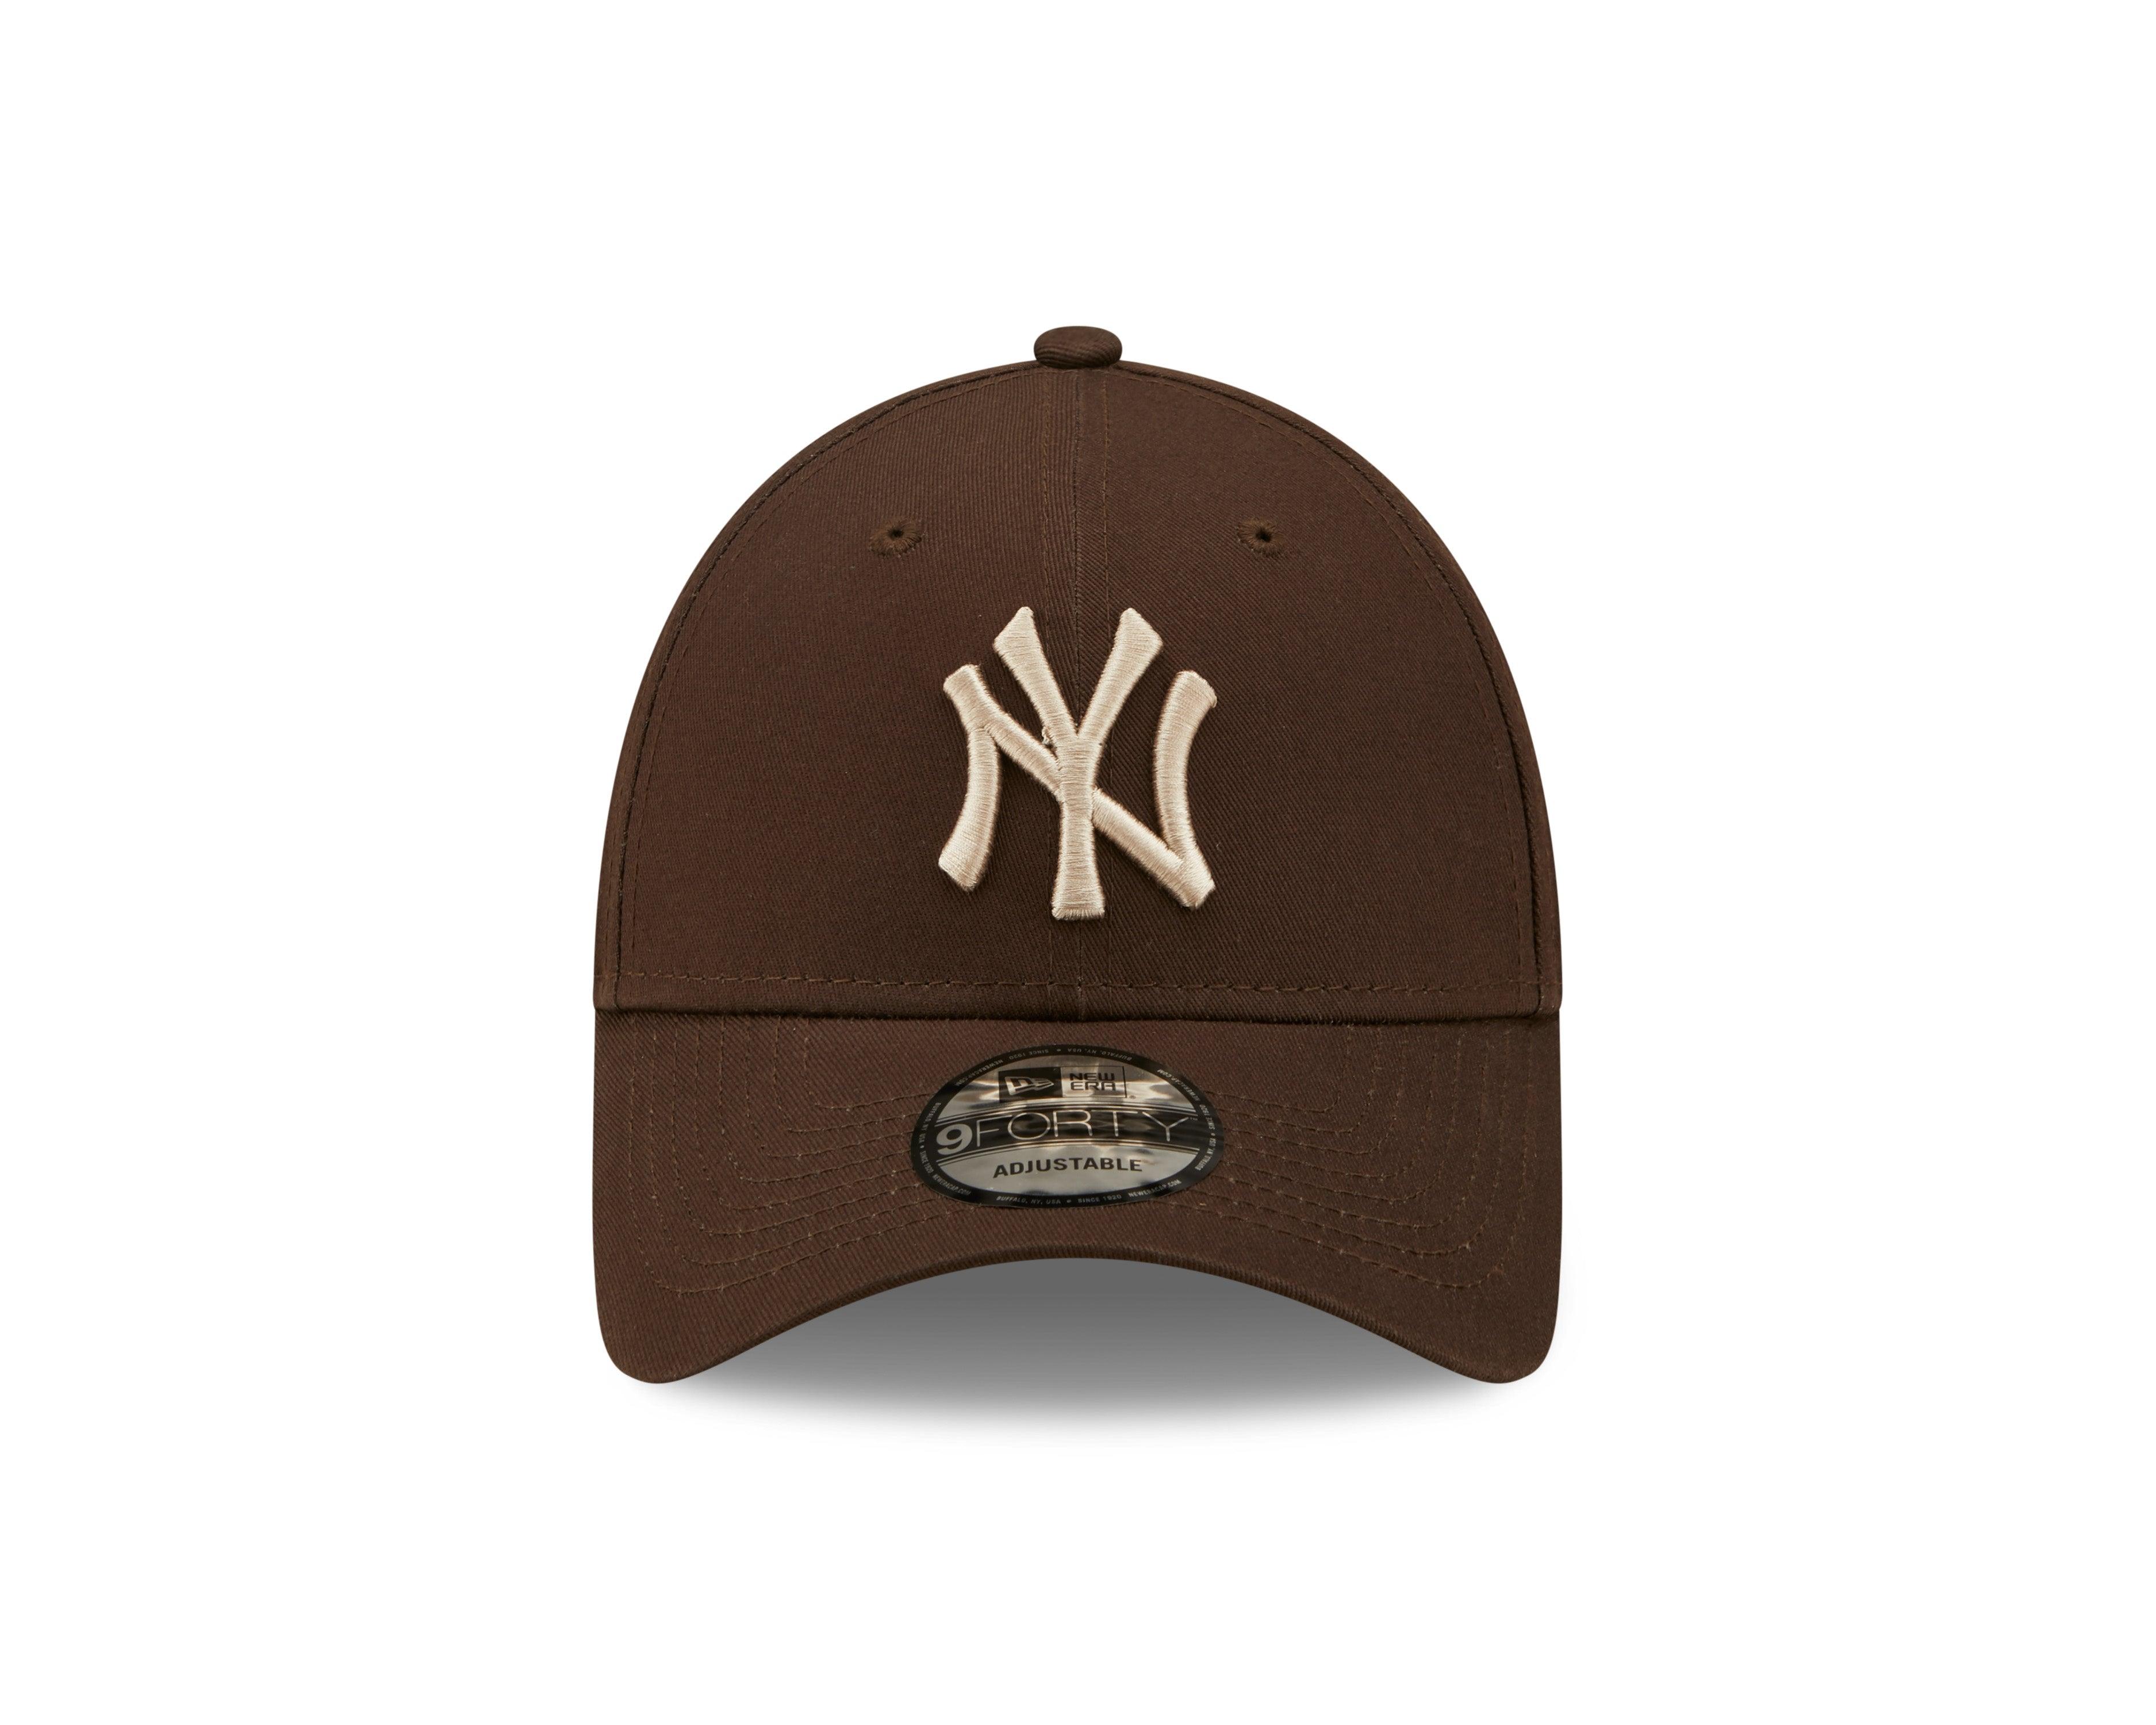 NEW ERA 9FORTY MLB LEAGUE ESSENTIAL NEW YORK YANKEES BROWN CAP - FAM